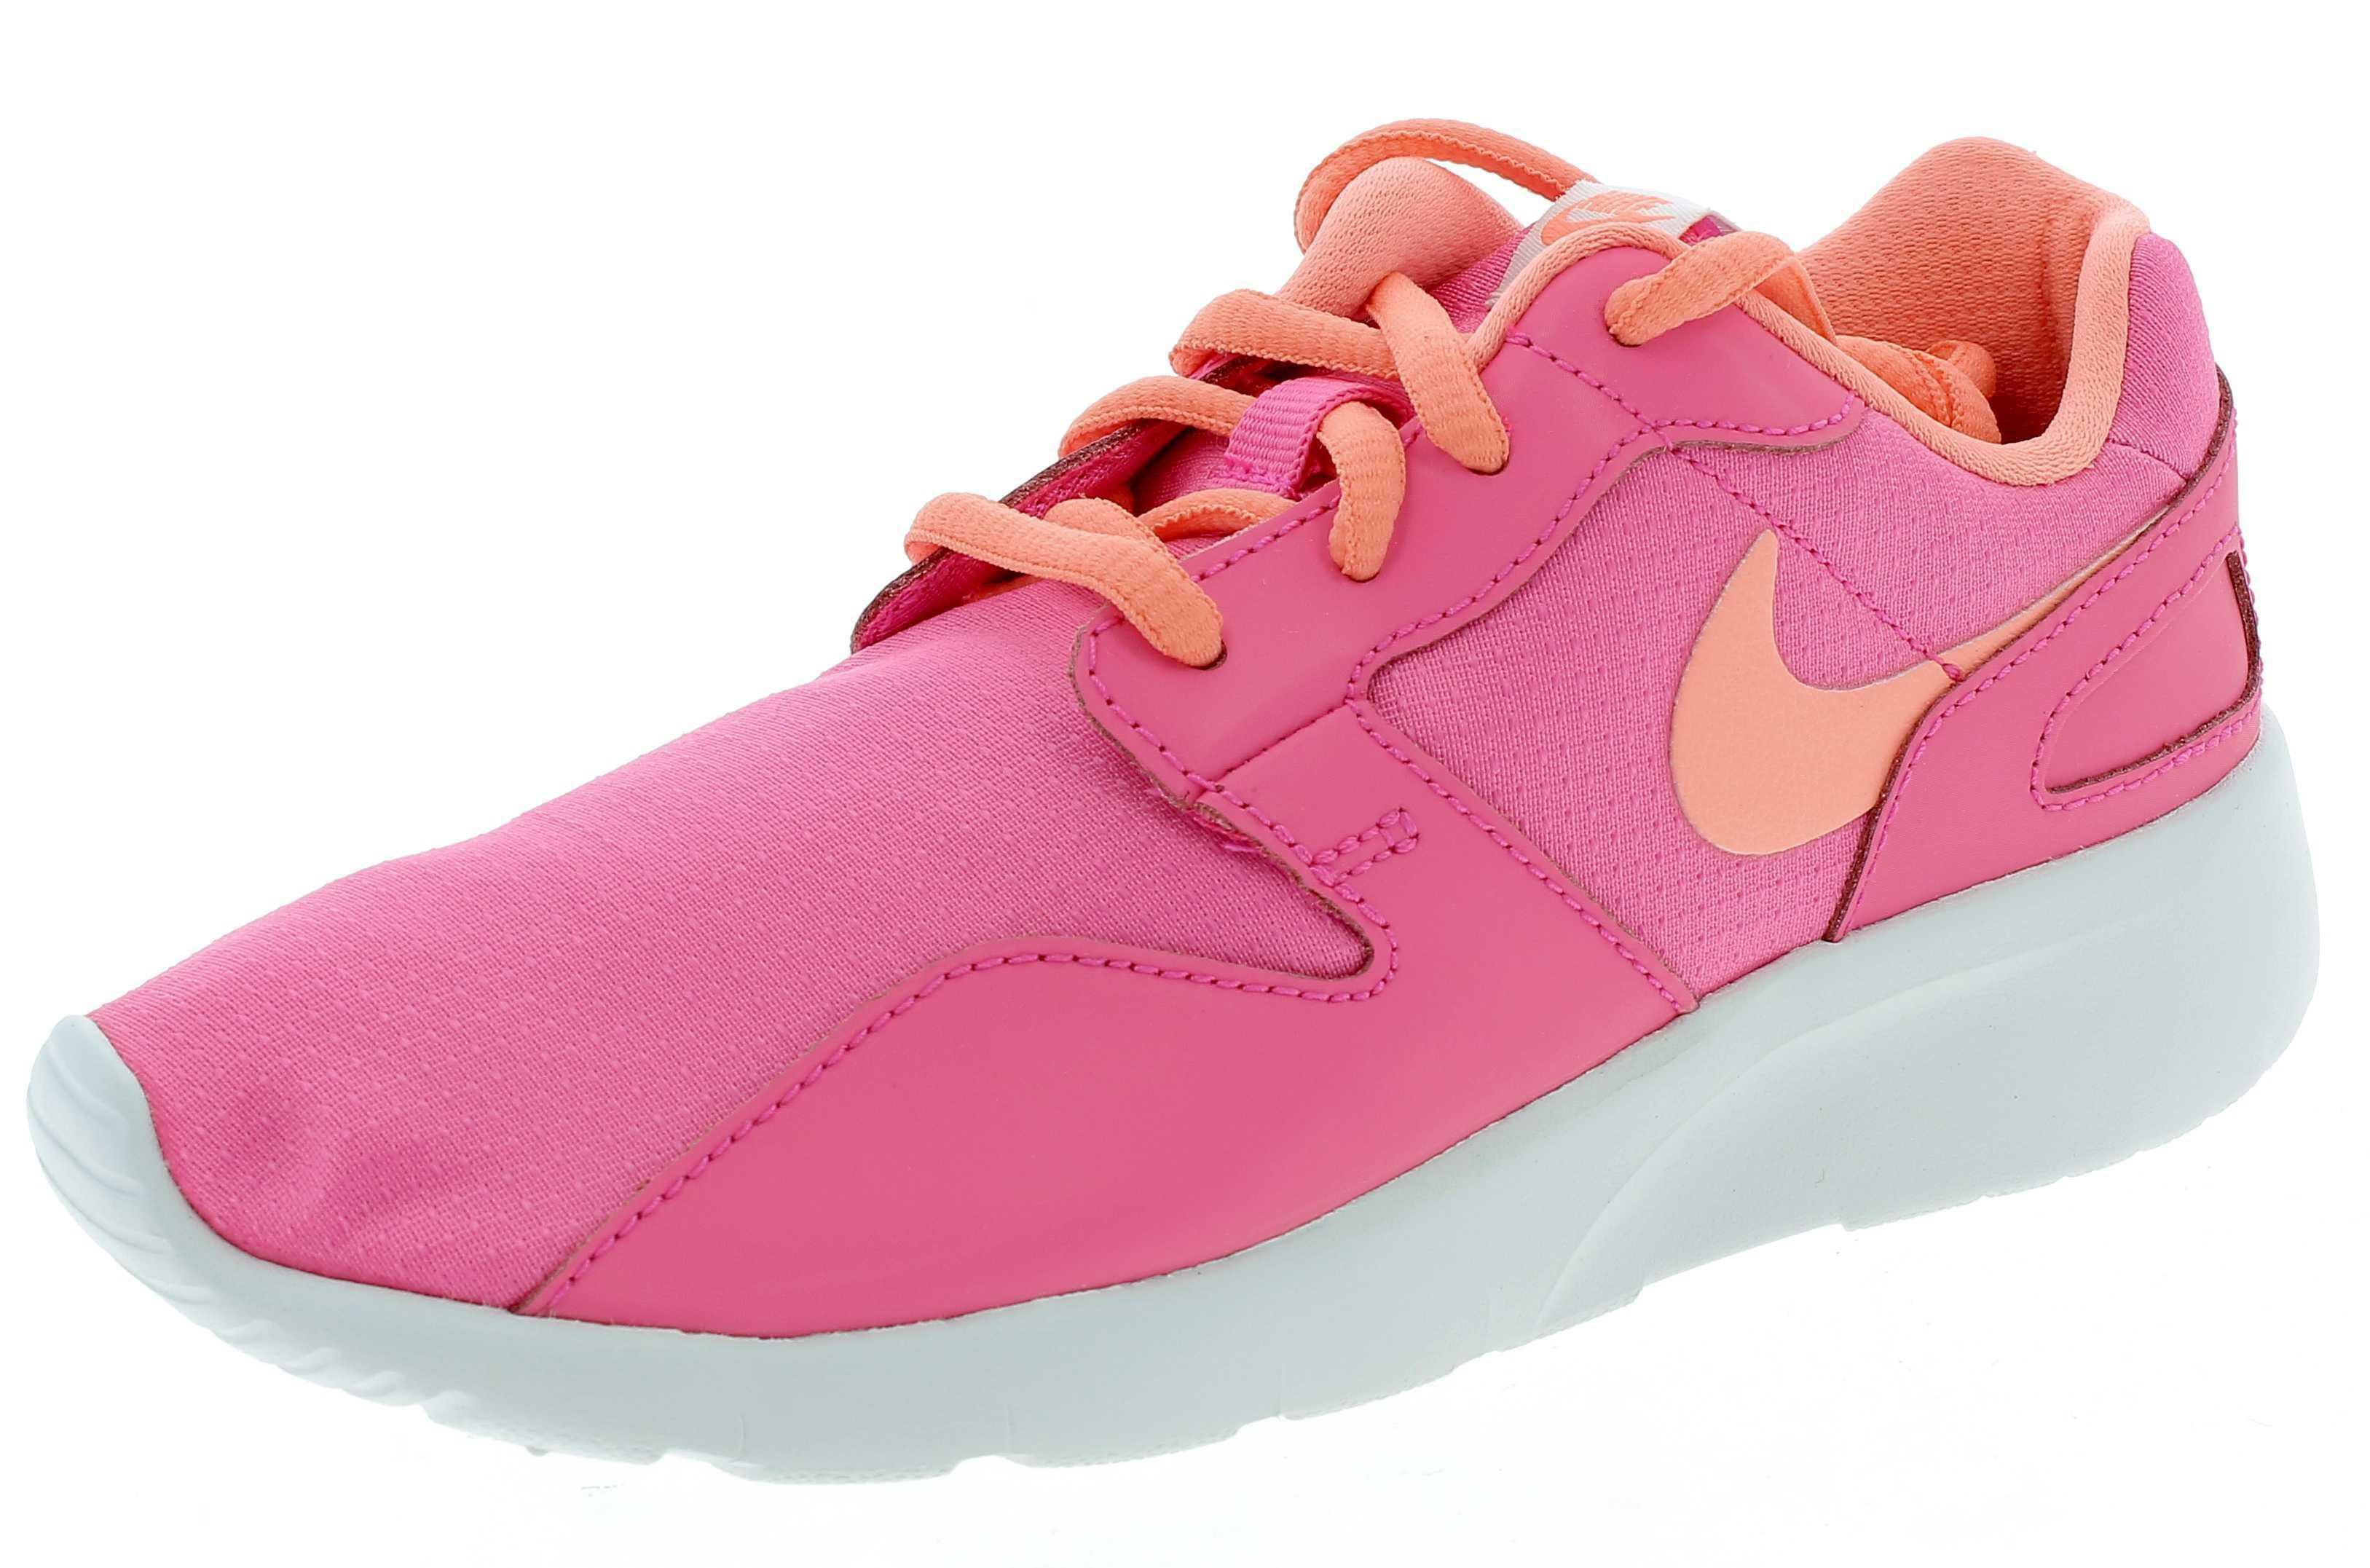 nike nike kaishi (ps) scarpe sportive bambina rosa pelle tela 705493